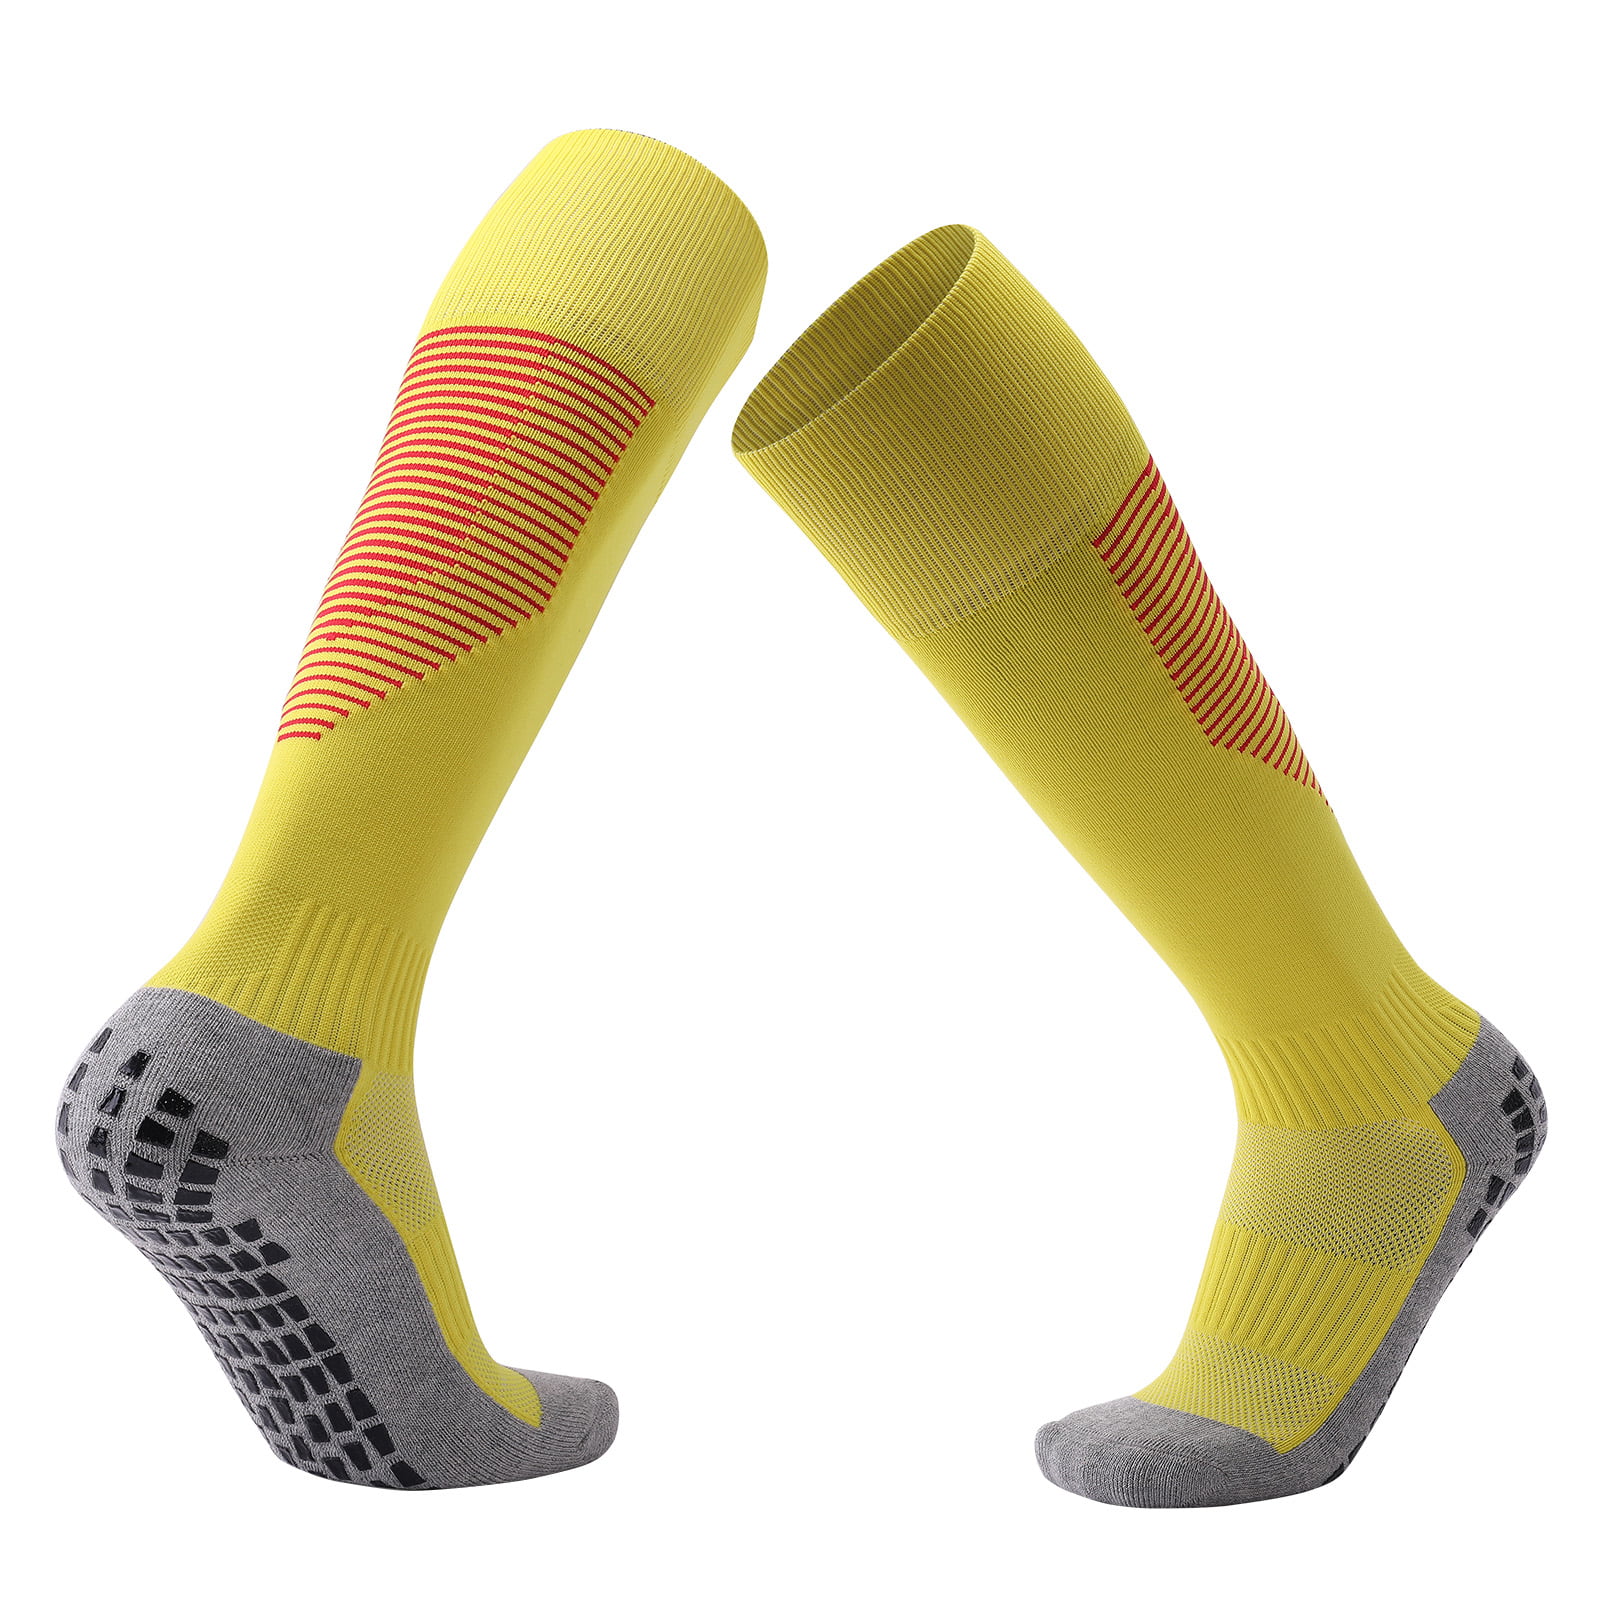 Anti-Slip Compression Socks Stretch Cycling Soccer High Socking Over Knee 